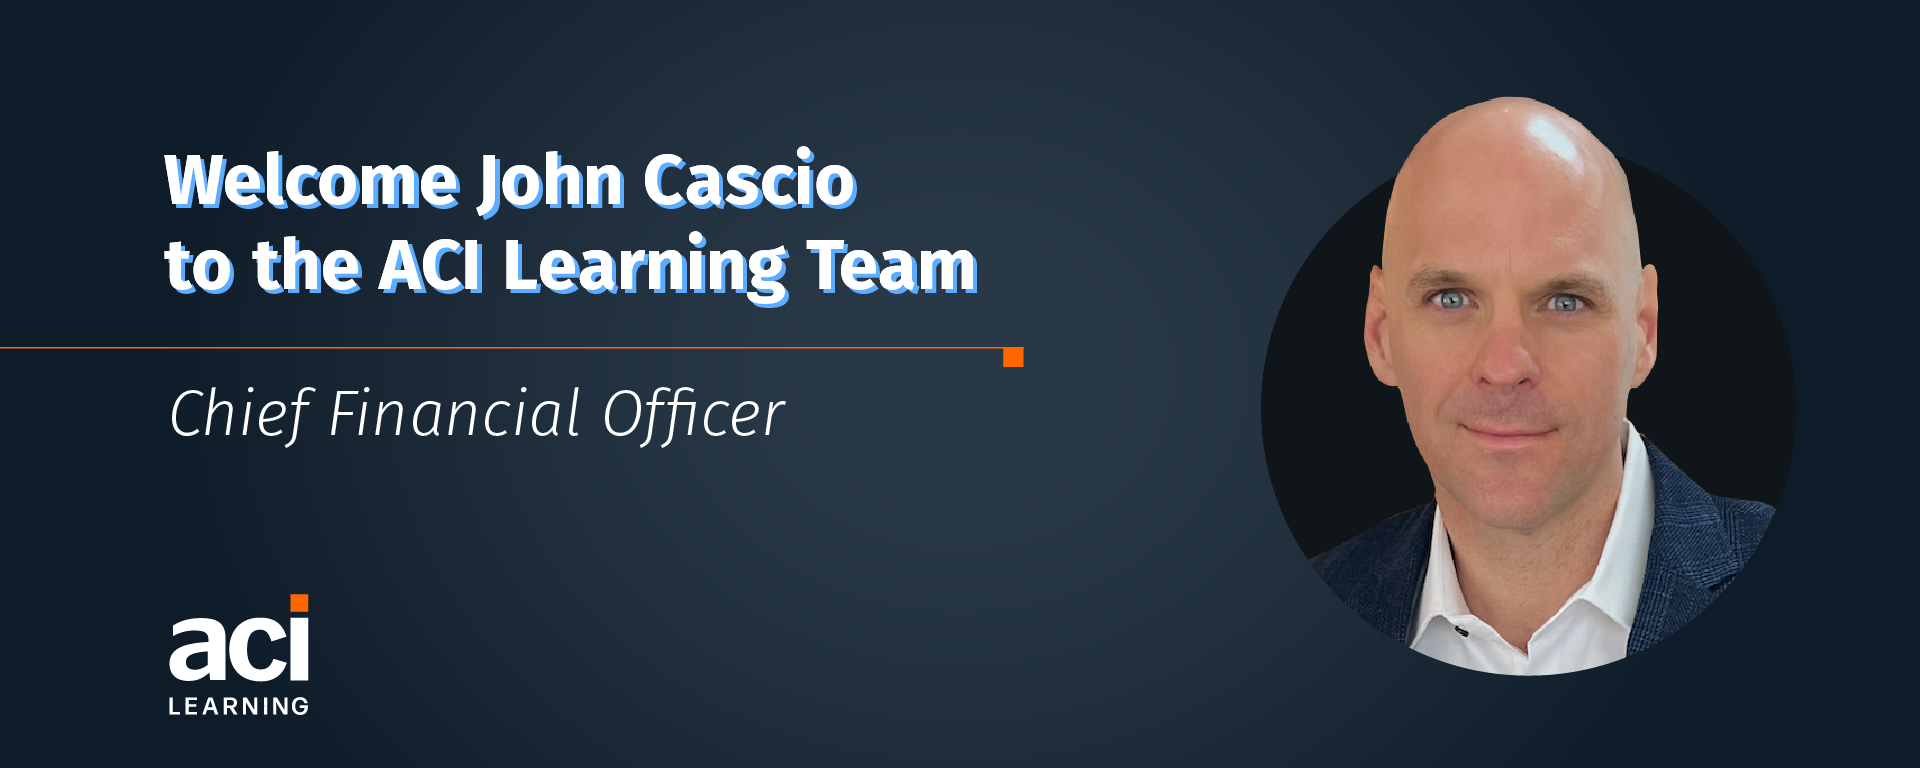 John Cascio joins ACI Learning as CFO